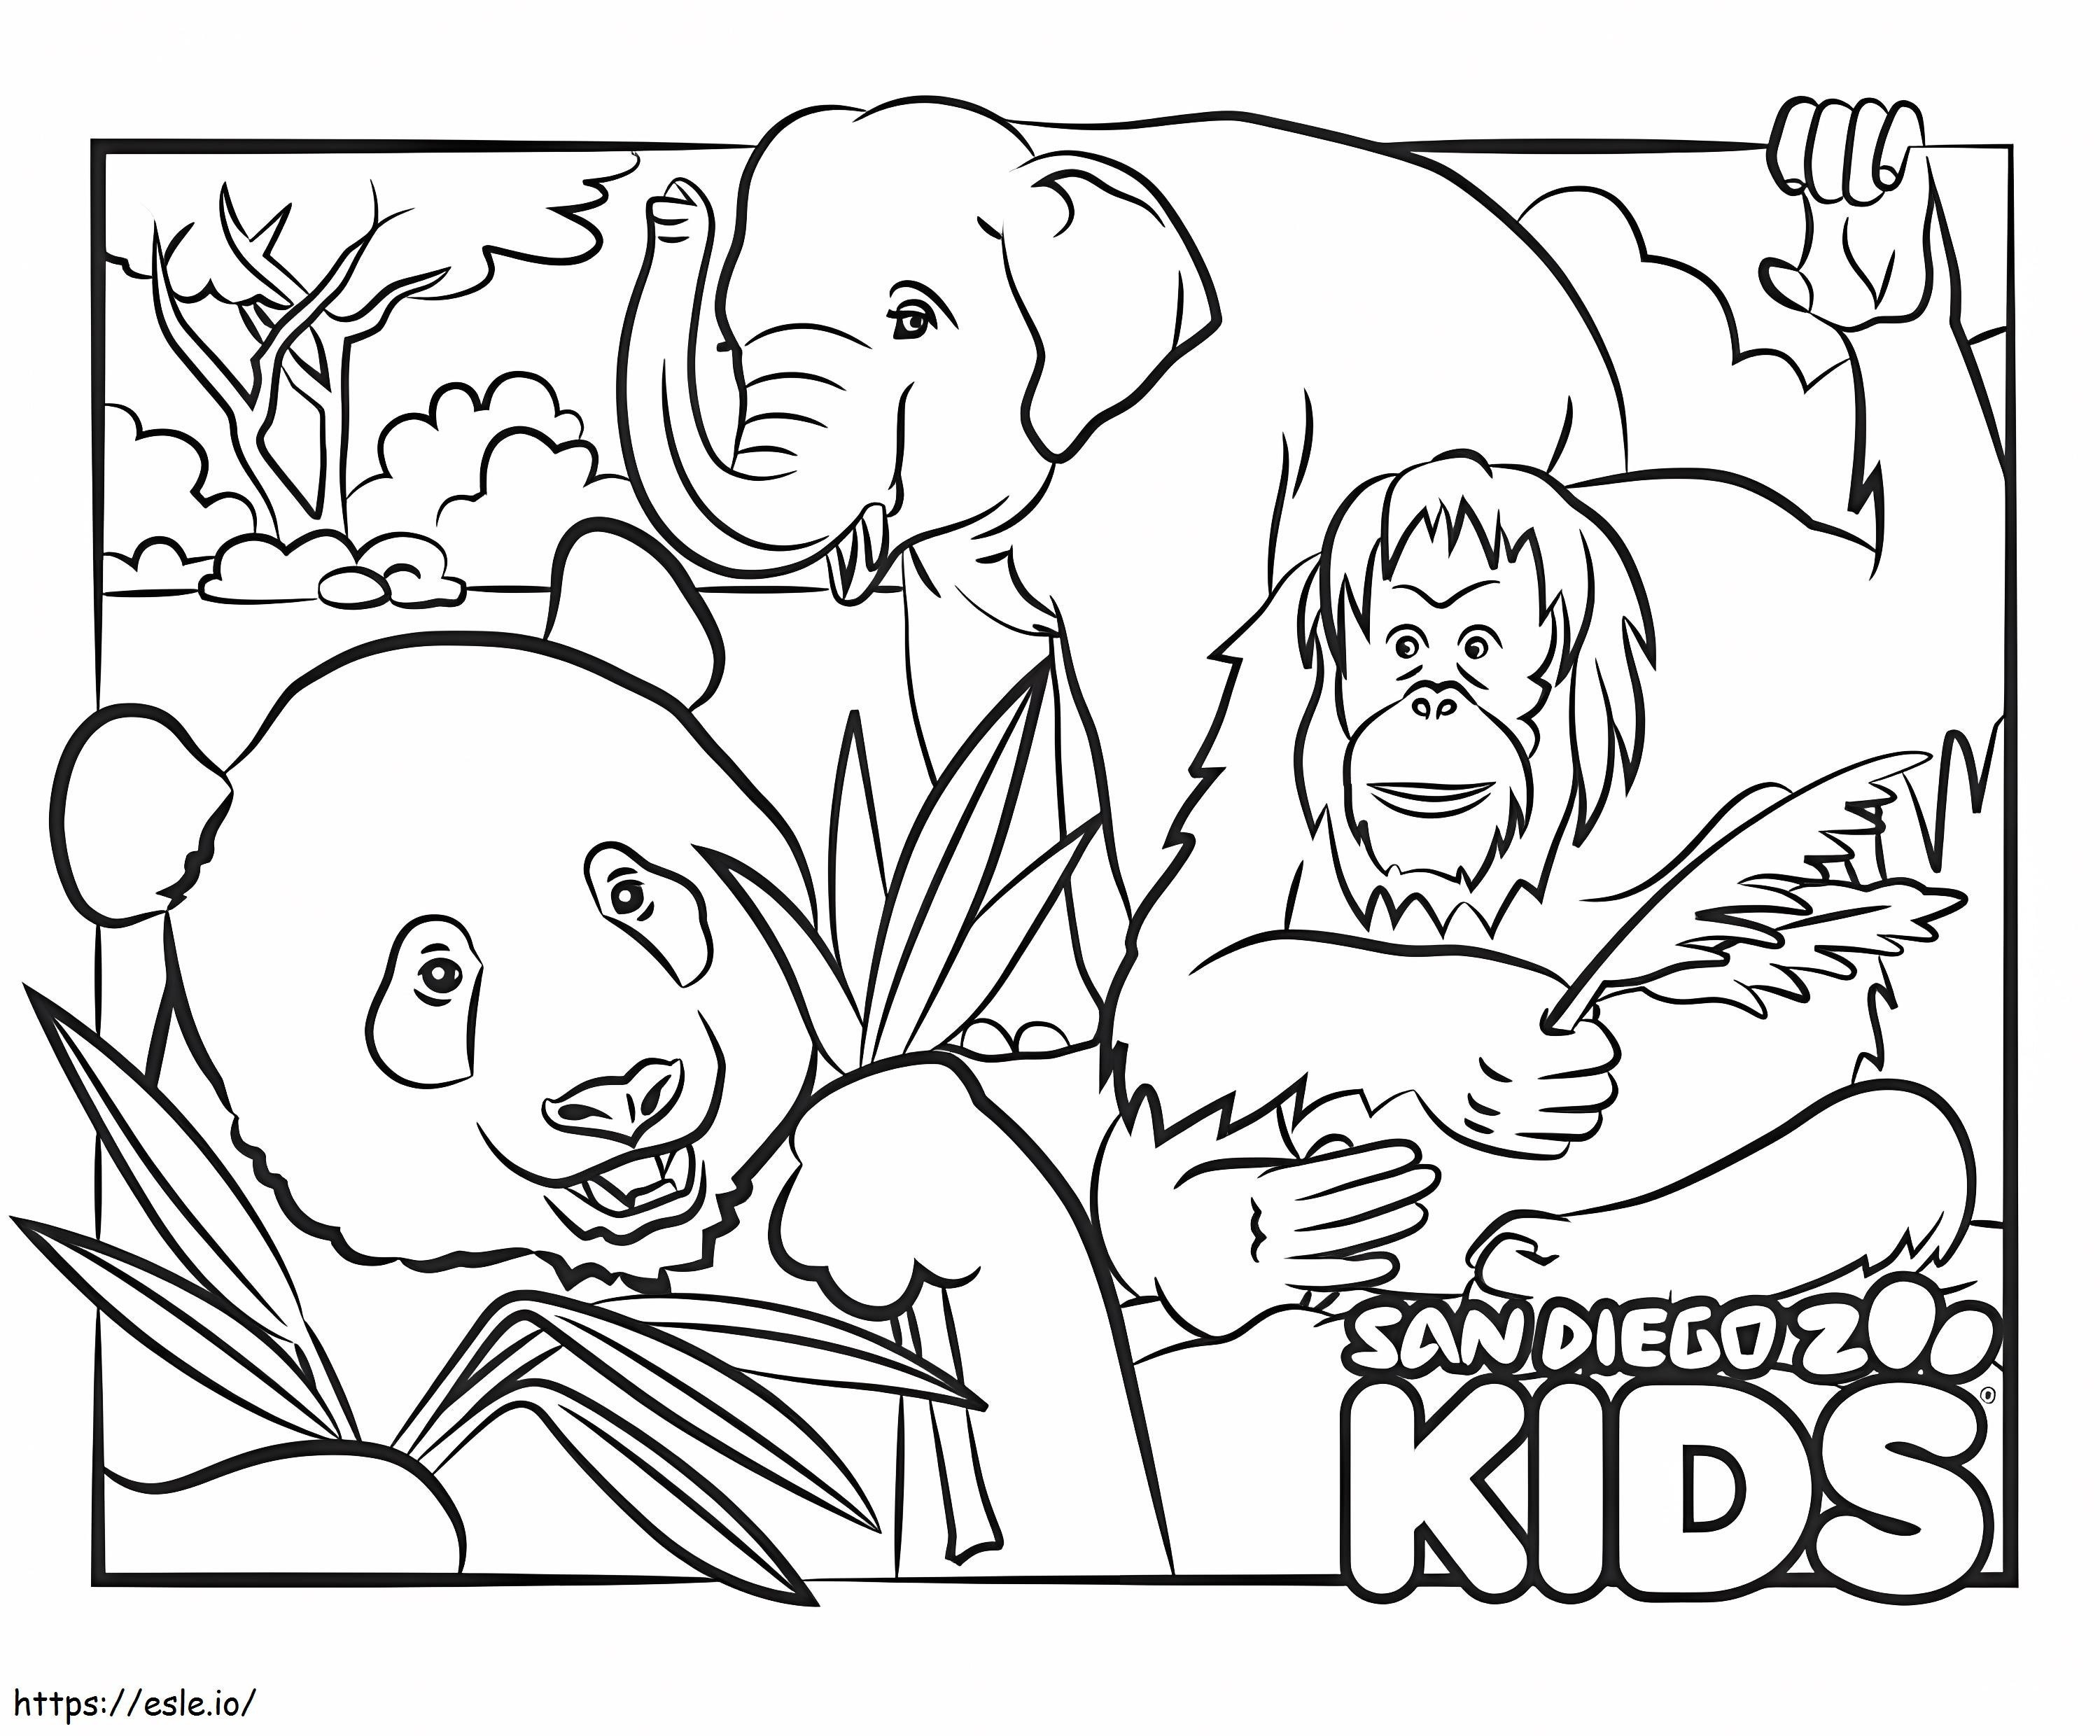 Panda Ed Elefante Di Orangutan da colorare